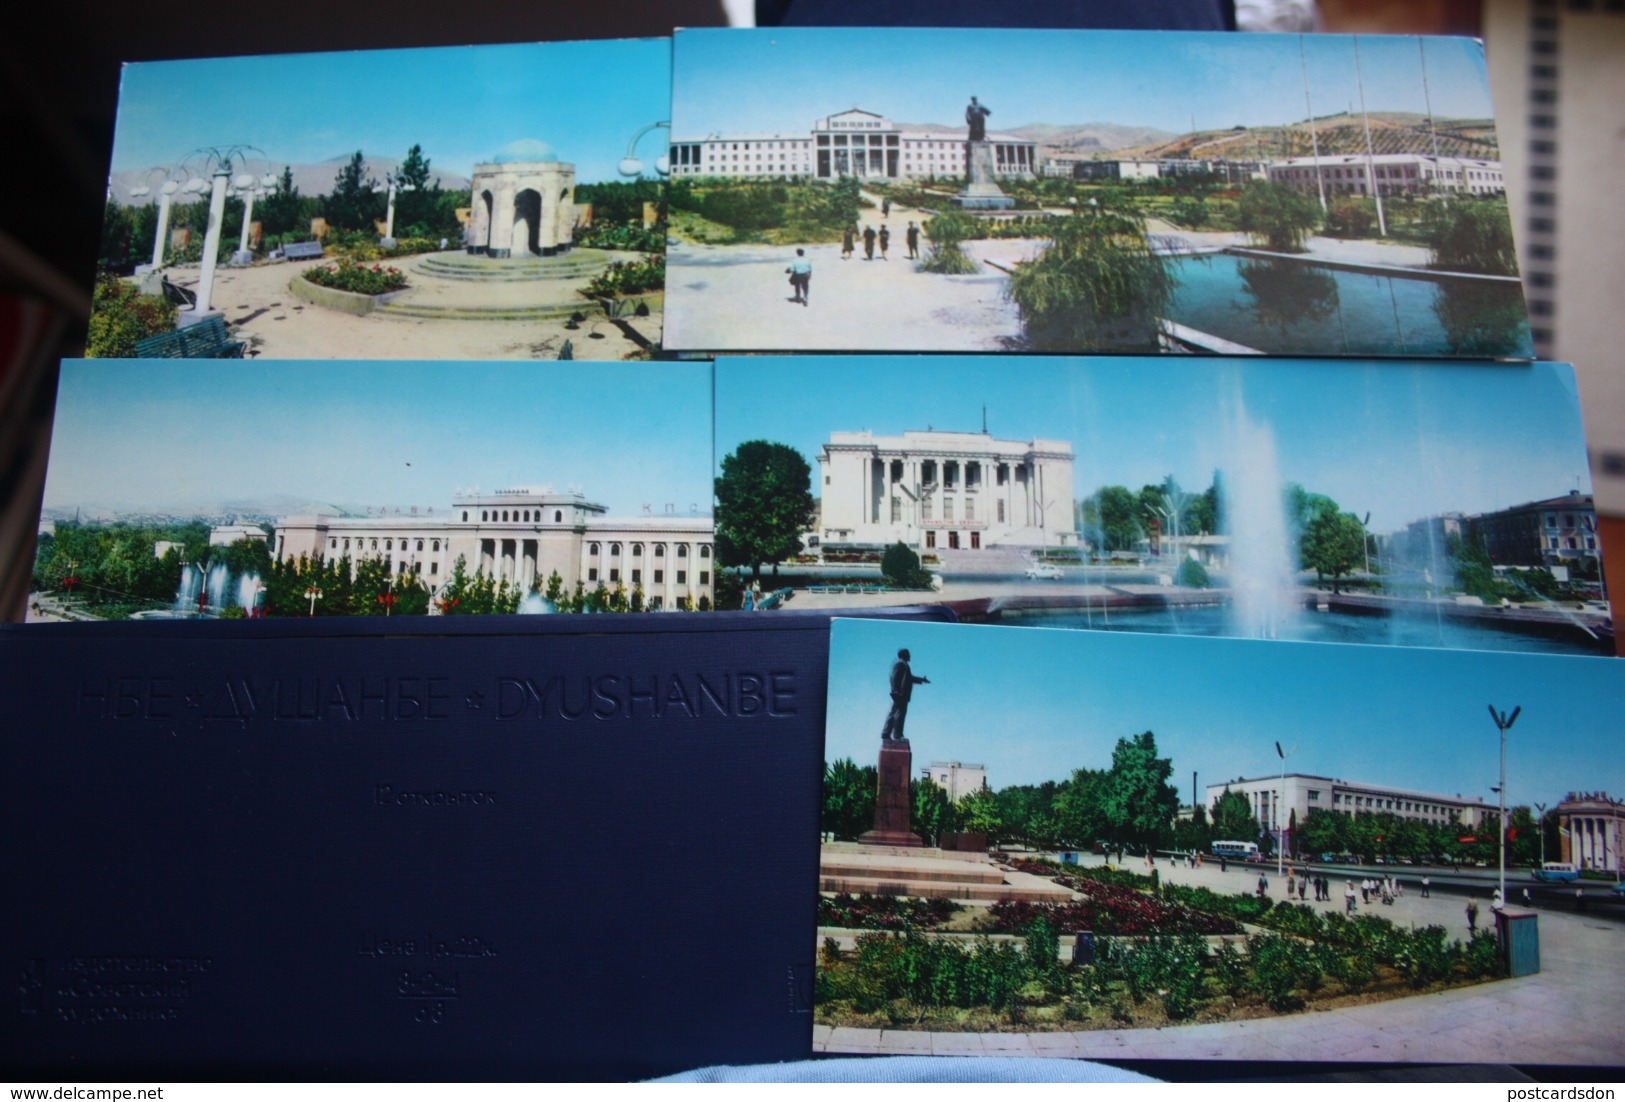 TAJIKISTAN  Dushanbe  Capital.  11 Postcards Lot  - Old USSR Postcard  - 1960s - Tagikistan